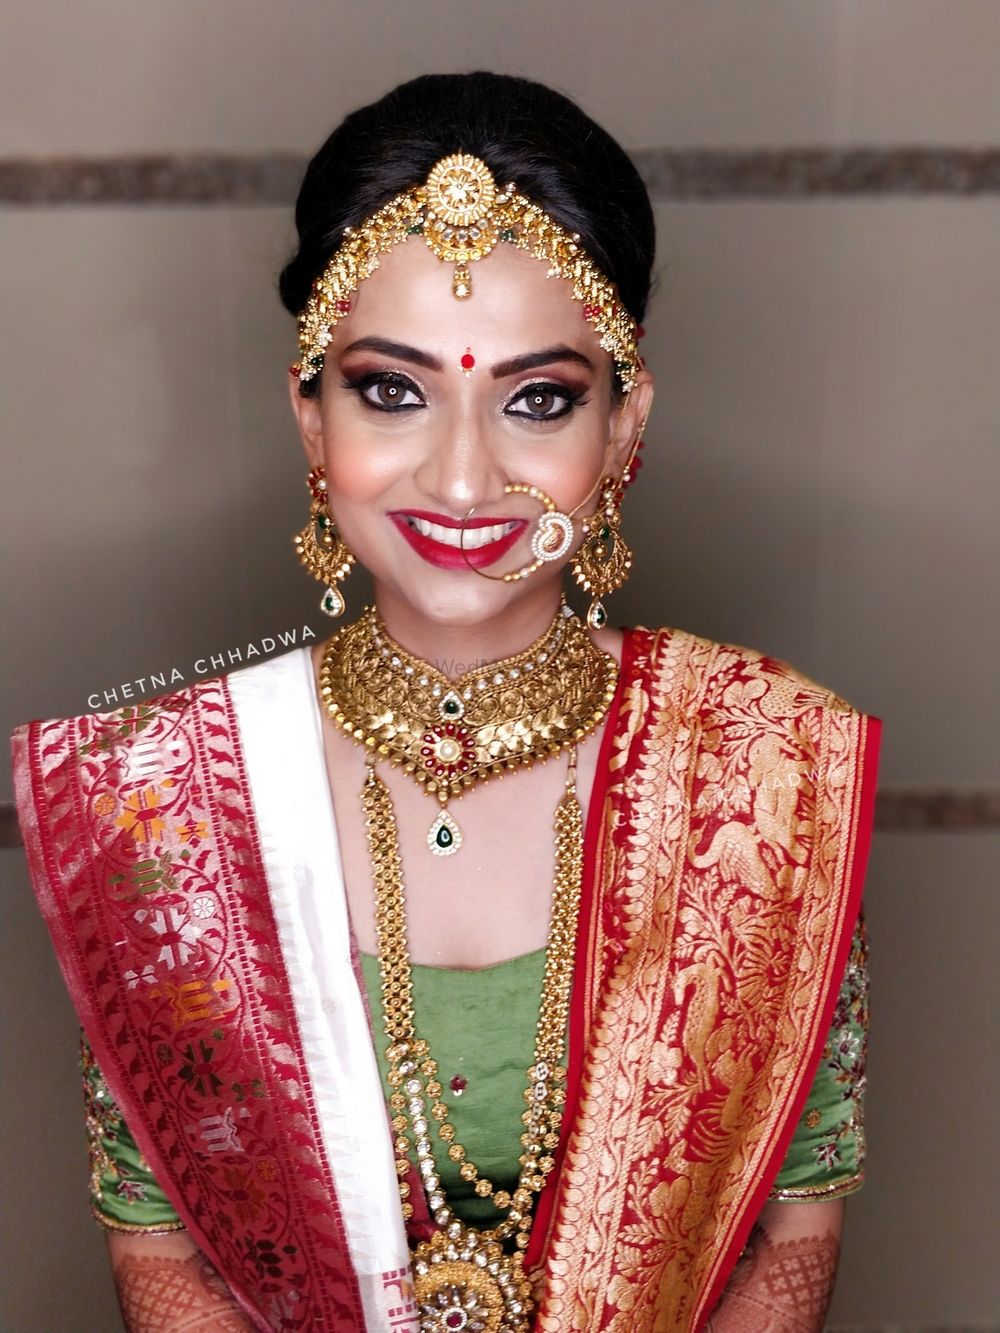 Photo From Royalicious Bride - By Chetna Chhadwas Bridal World